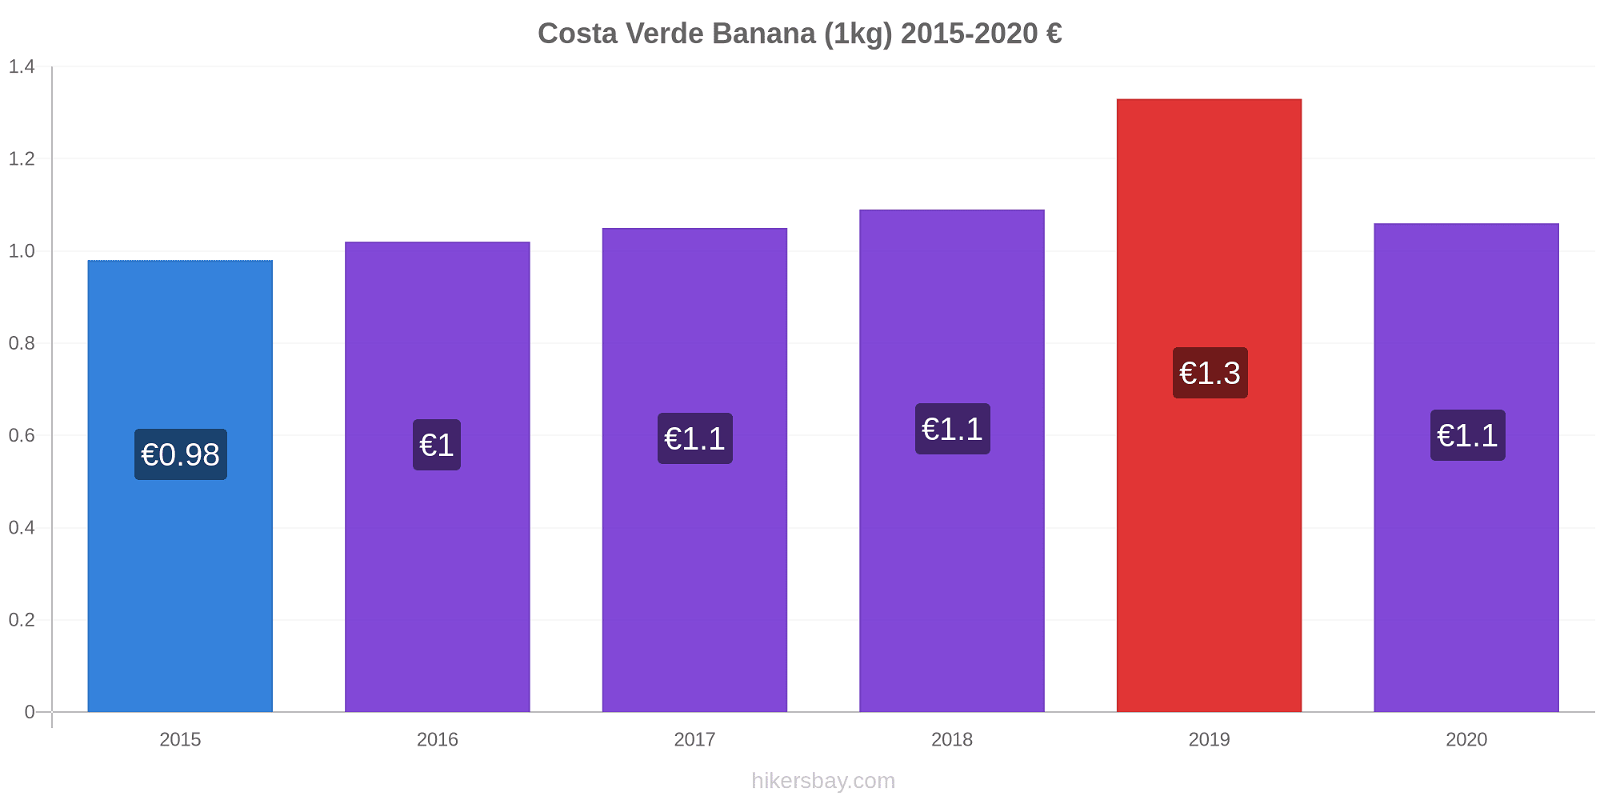 Costa Verde modificări de preț Banana (1kg) hikersbay.com